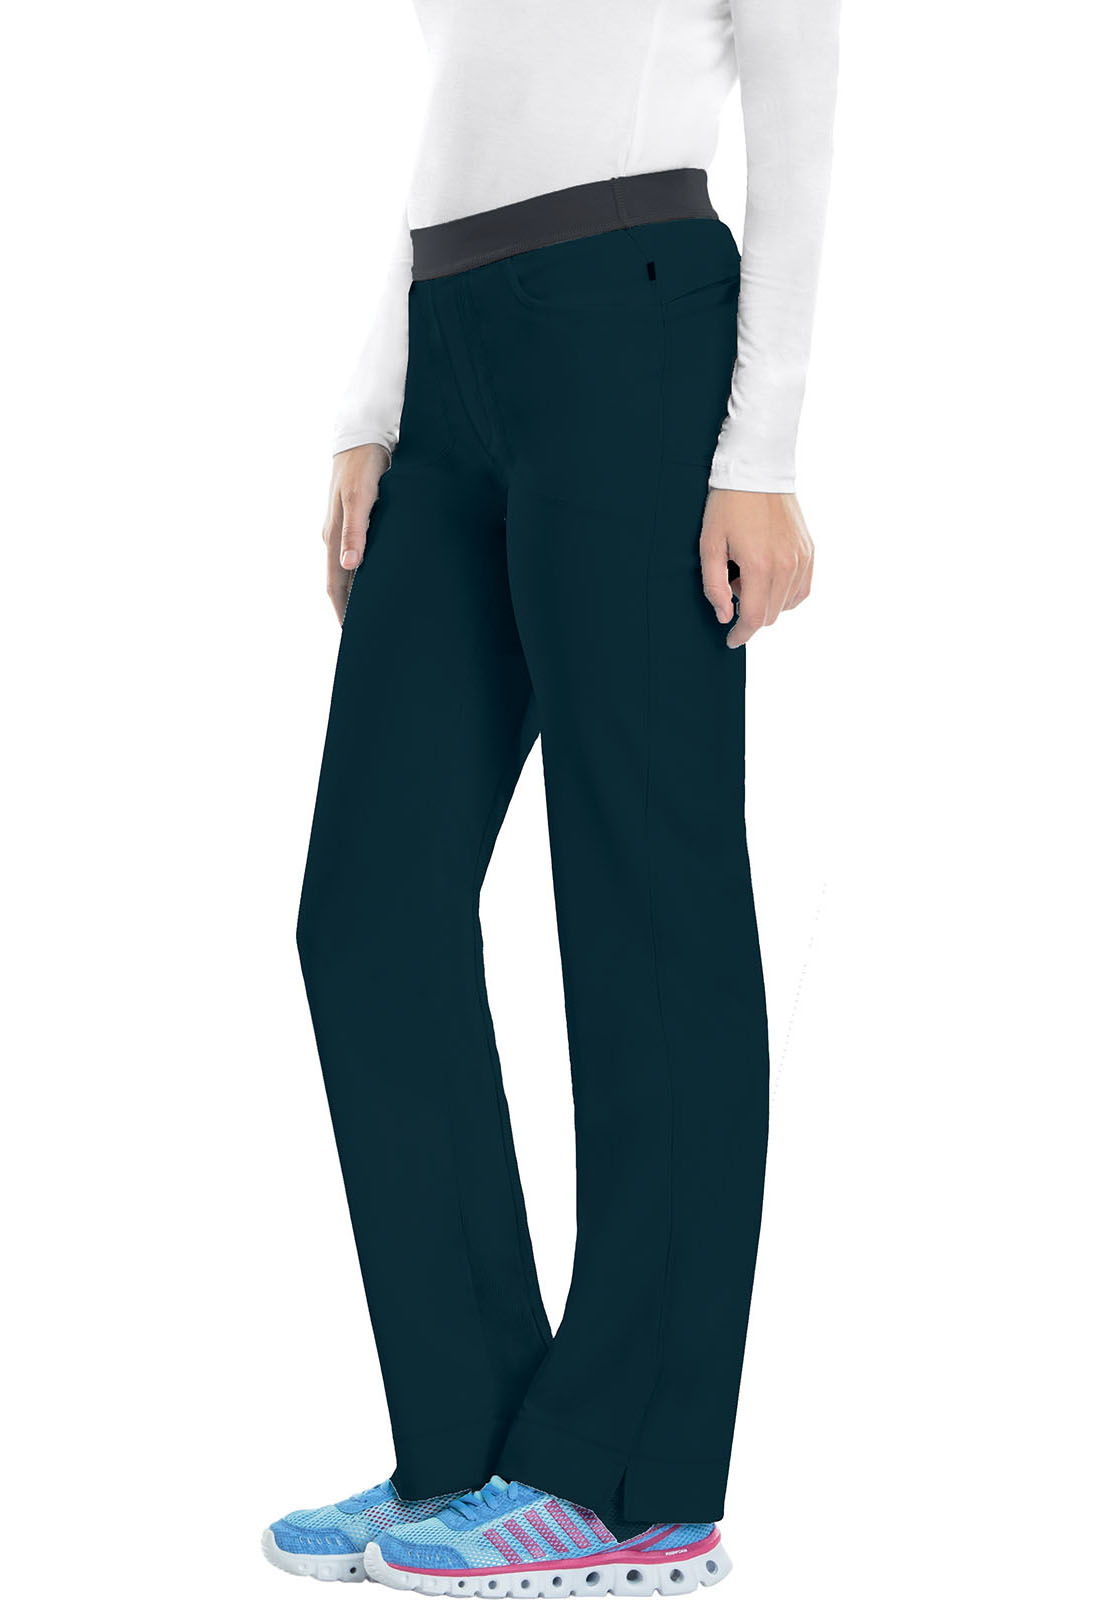 Women's Cherokee white trousers size 18 brand new | eBay